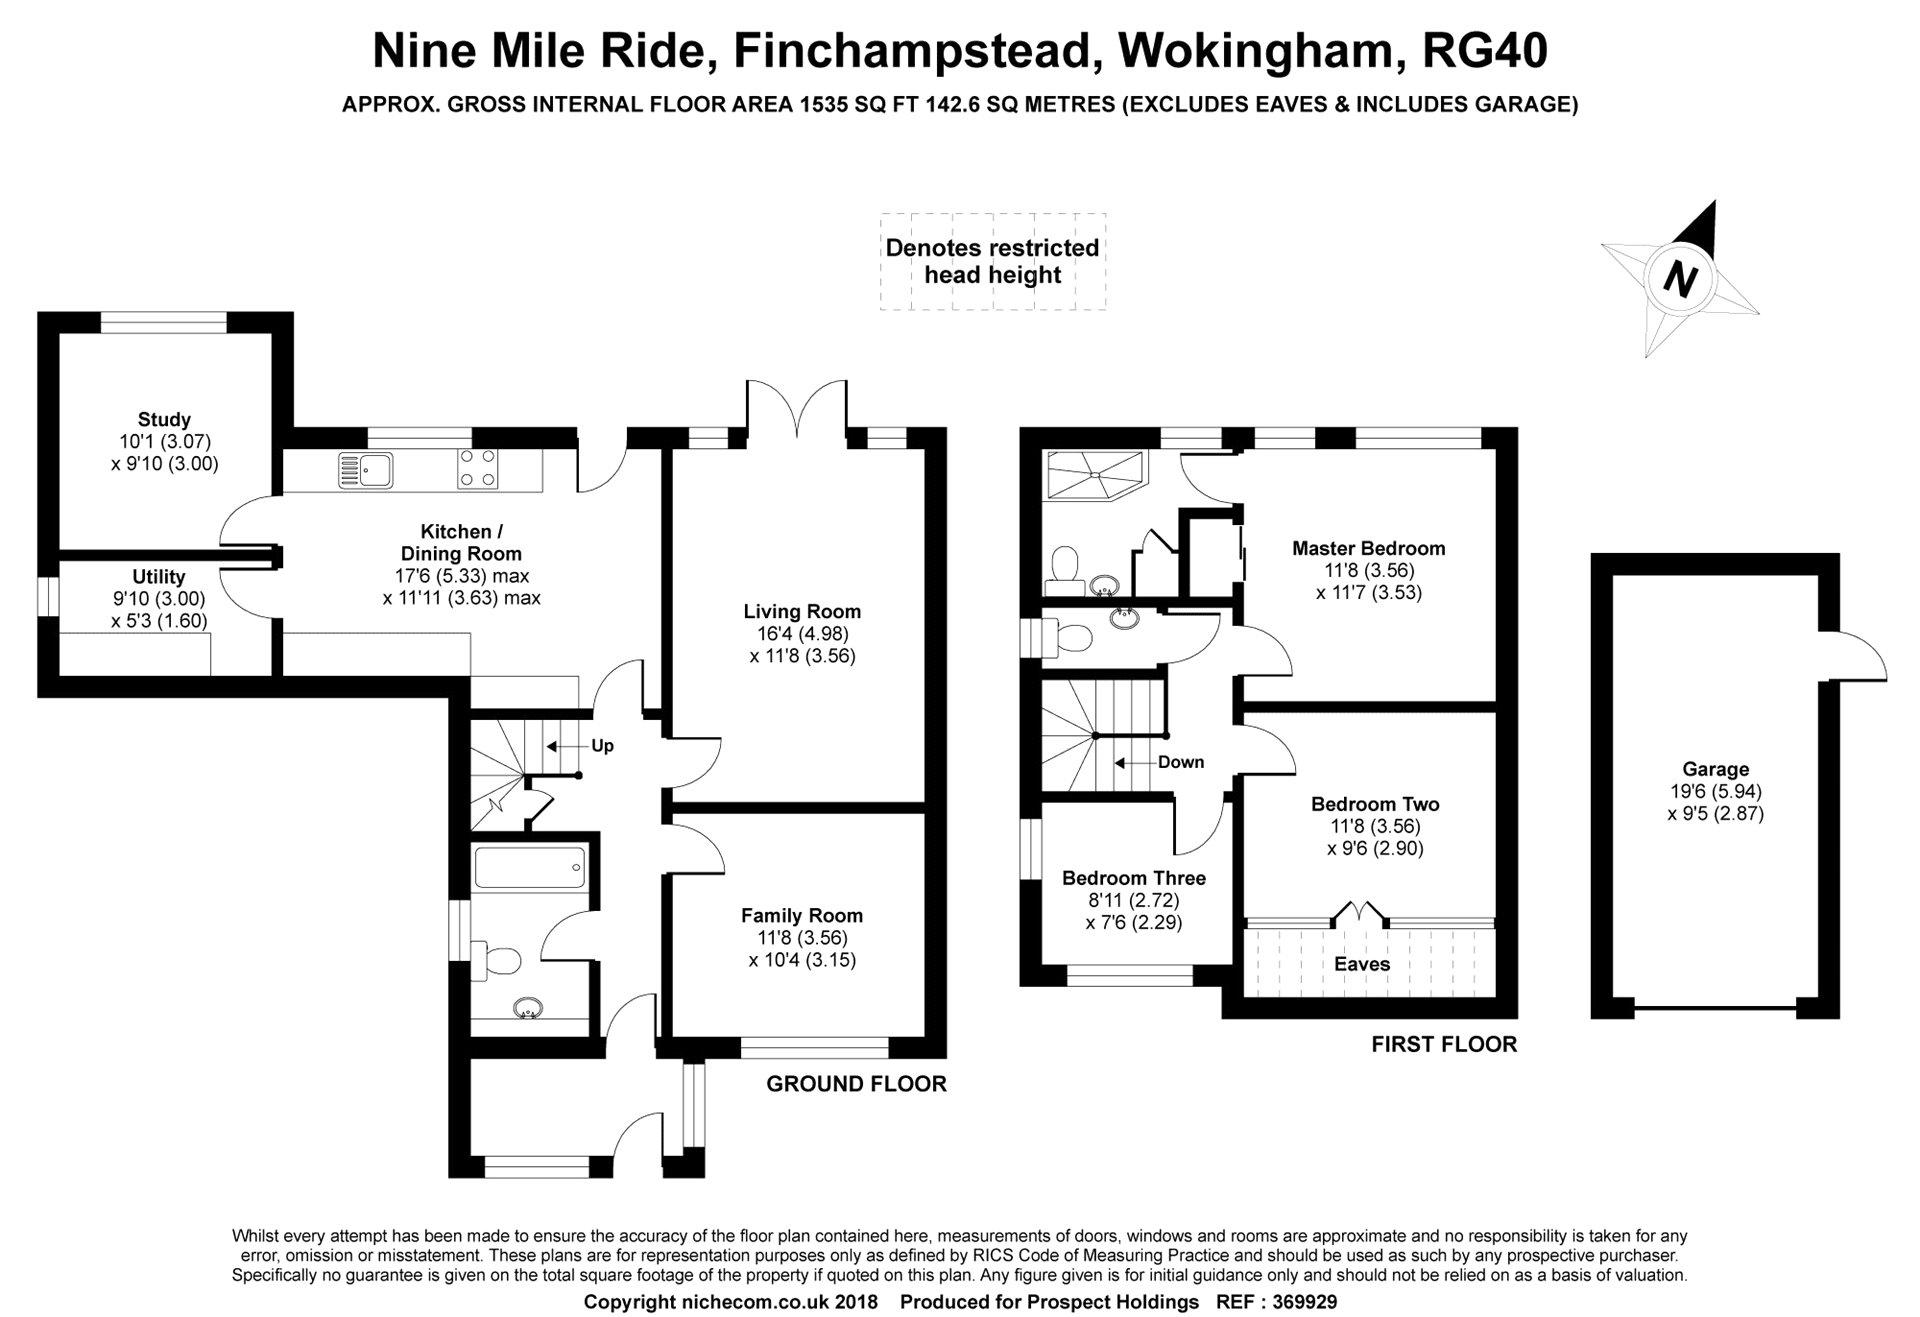 3 Bedrooms Semi-detached house for sale in Nine Mile Ride, Finchampstead, Wokingham, Berkshire RG40